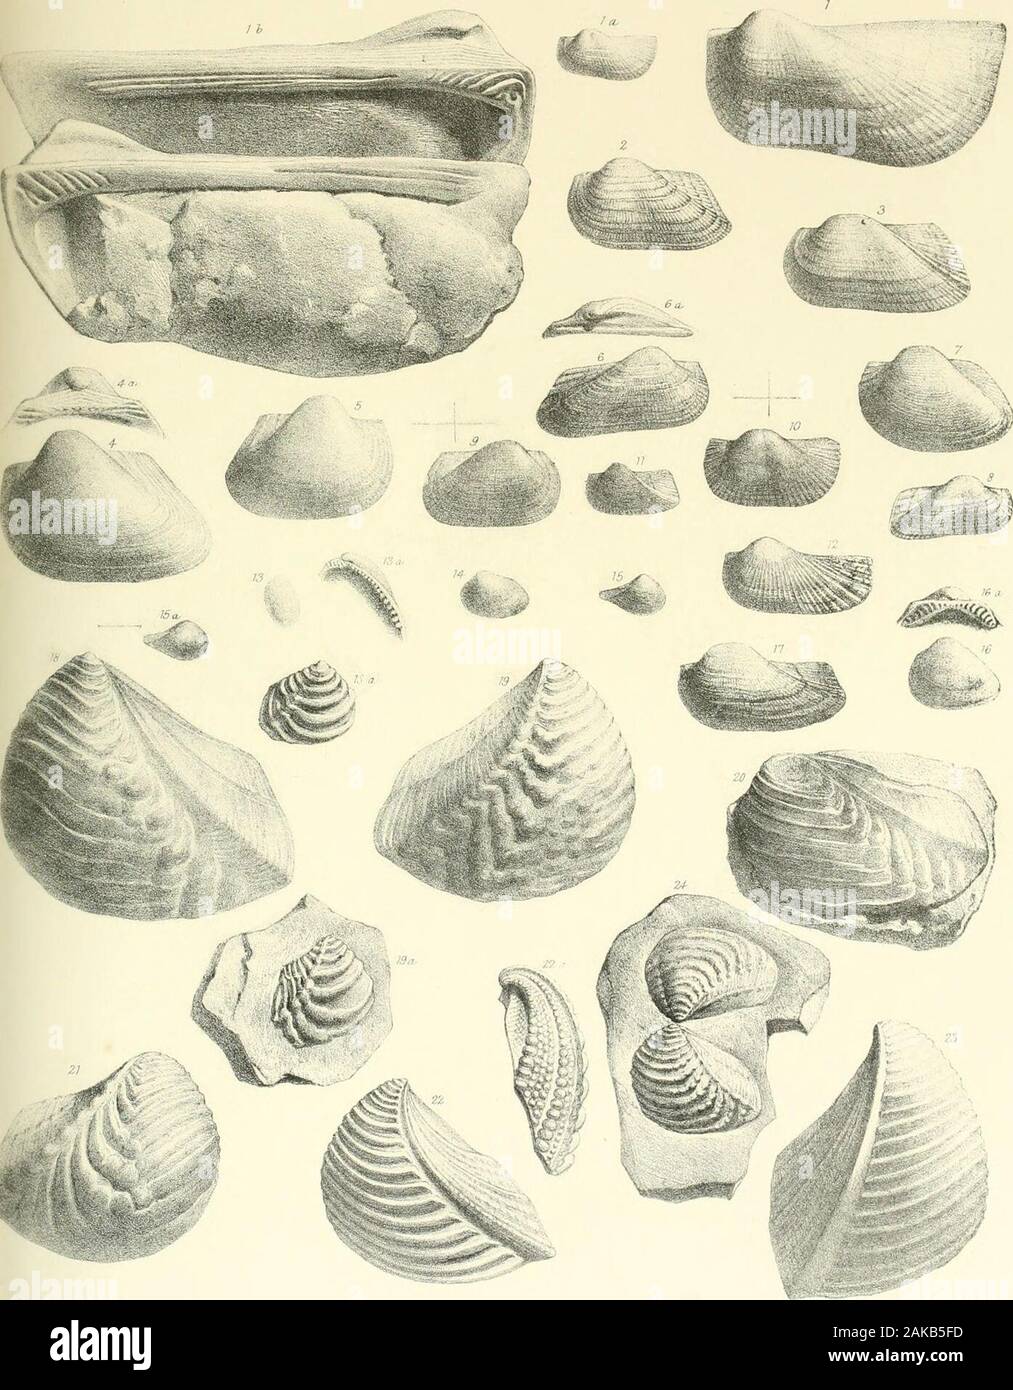 A monograph of the Mollusca from the Great Oolite chiefly from Minchinhampton and the coast of Yorkshire . Aflulles lei etlitb Prmtelby Yaii !c Wei I TAB. V. Fig. 1. 16. Macrodon (Area) Hirsonensis, p. 49. 1 a. ,, young state of ditto, p. 49. 2. Area rugosa, p. 47. 3. „ Prattii, j». 45. 4. 4 a. Cucullsea Goldfussi, p. 50. 5. ,, cucullata, p. 51. 6. Area Eudesii, p. 46. 7. Cucullaea concinna, p. 50. 8. Area aemula, var. transversa,^. 47. 9. „ tenuitexta, p. 45. 10. „ Kilverti,jo. 45. 11. ,, minuta, p. 48. 12. „ rudis, p. 44. 13. 13a. Nucula variabilis,^. 51. 14. „ Waltoni,jO. 52. 15. 15 a. Leda Stock Photo